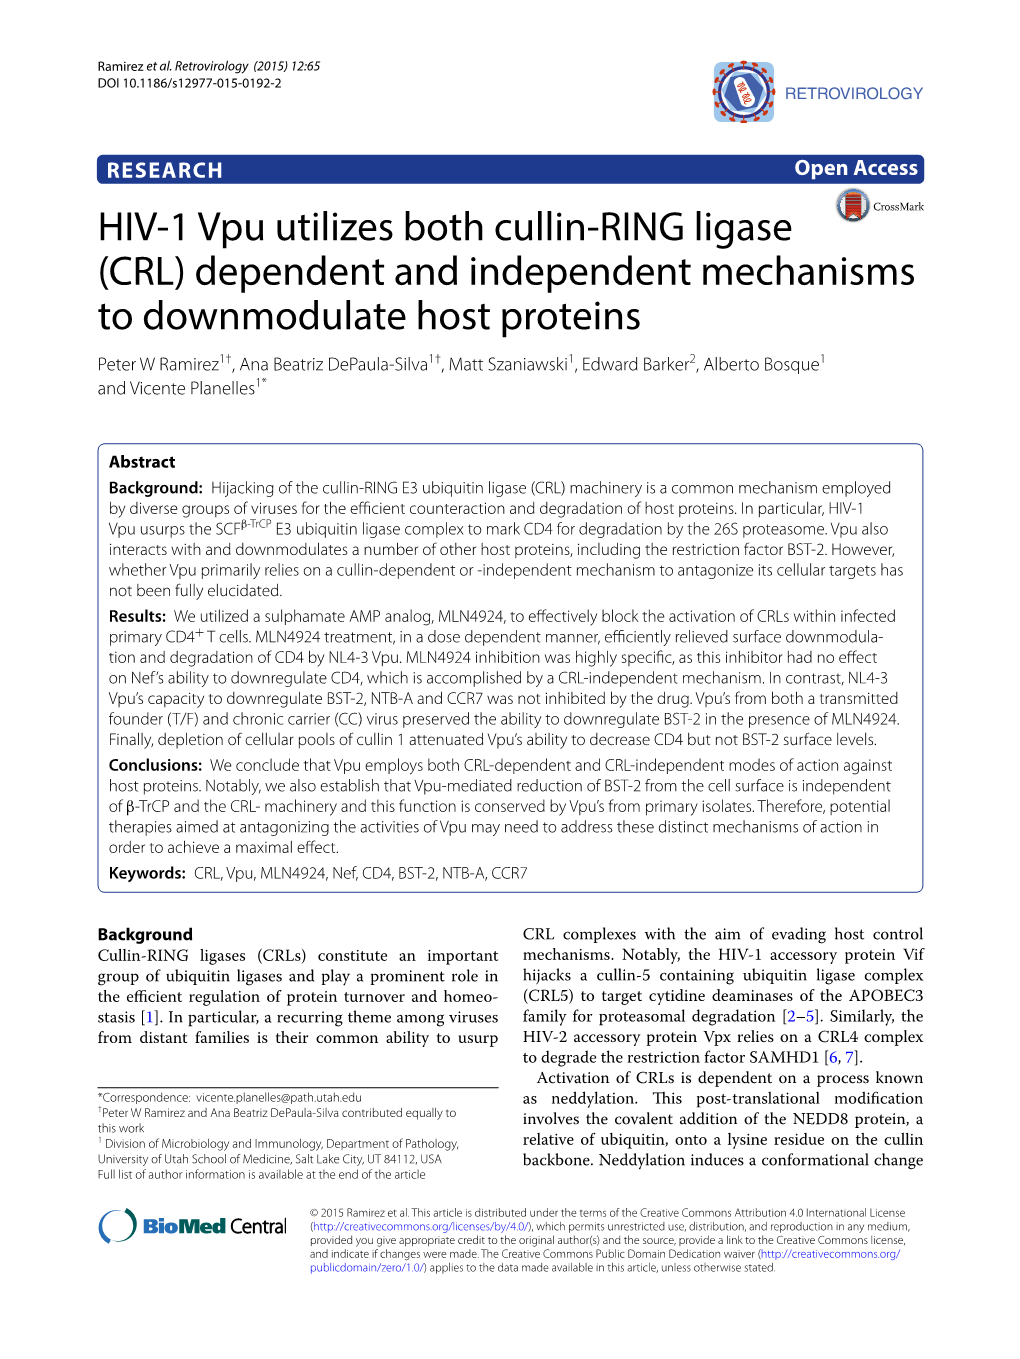 HIV-1 Vpu Utilizes Both Cullin-RING Ligase